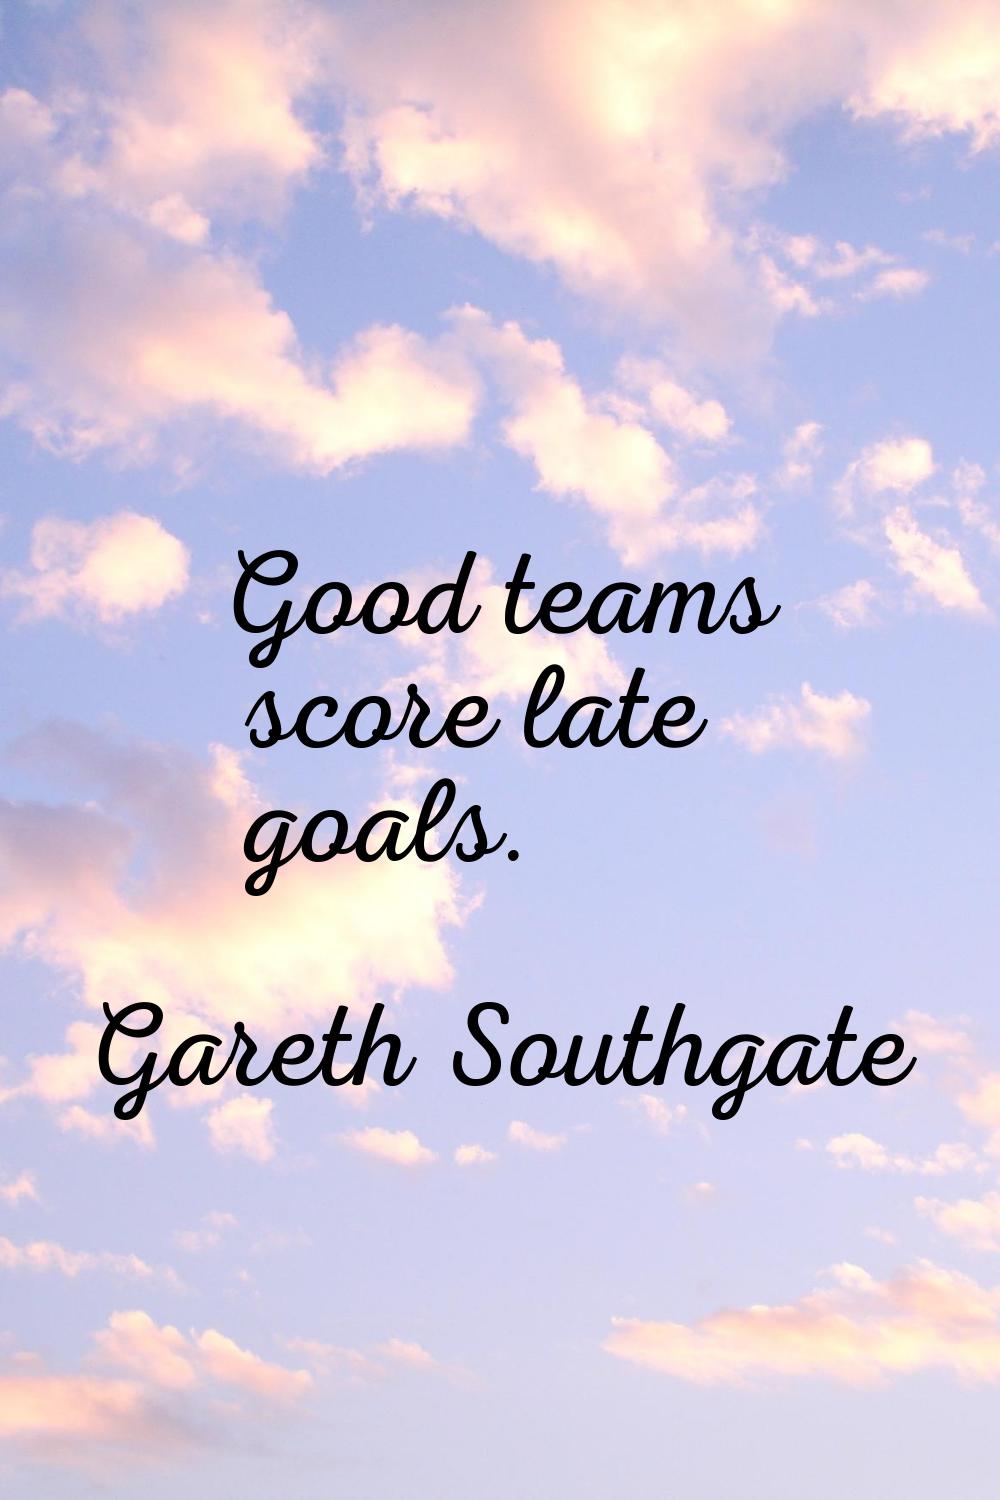 Good teams score late goals.